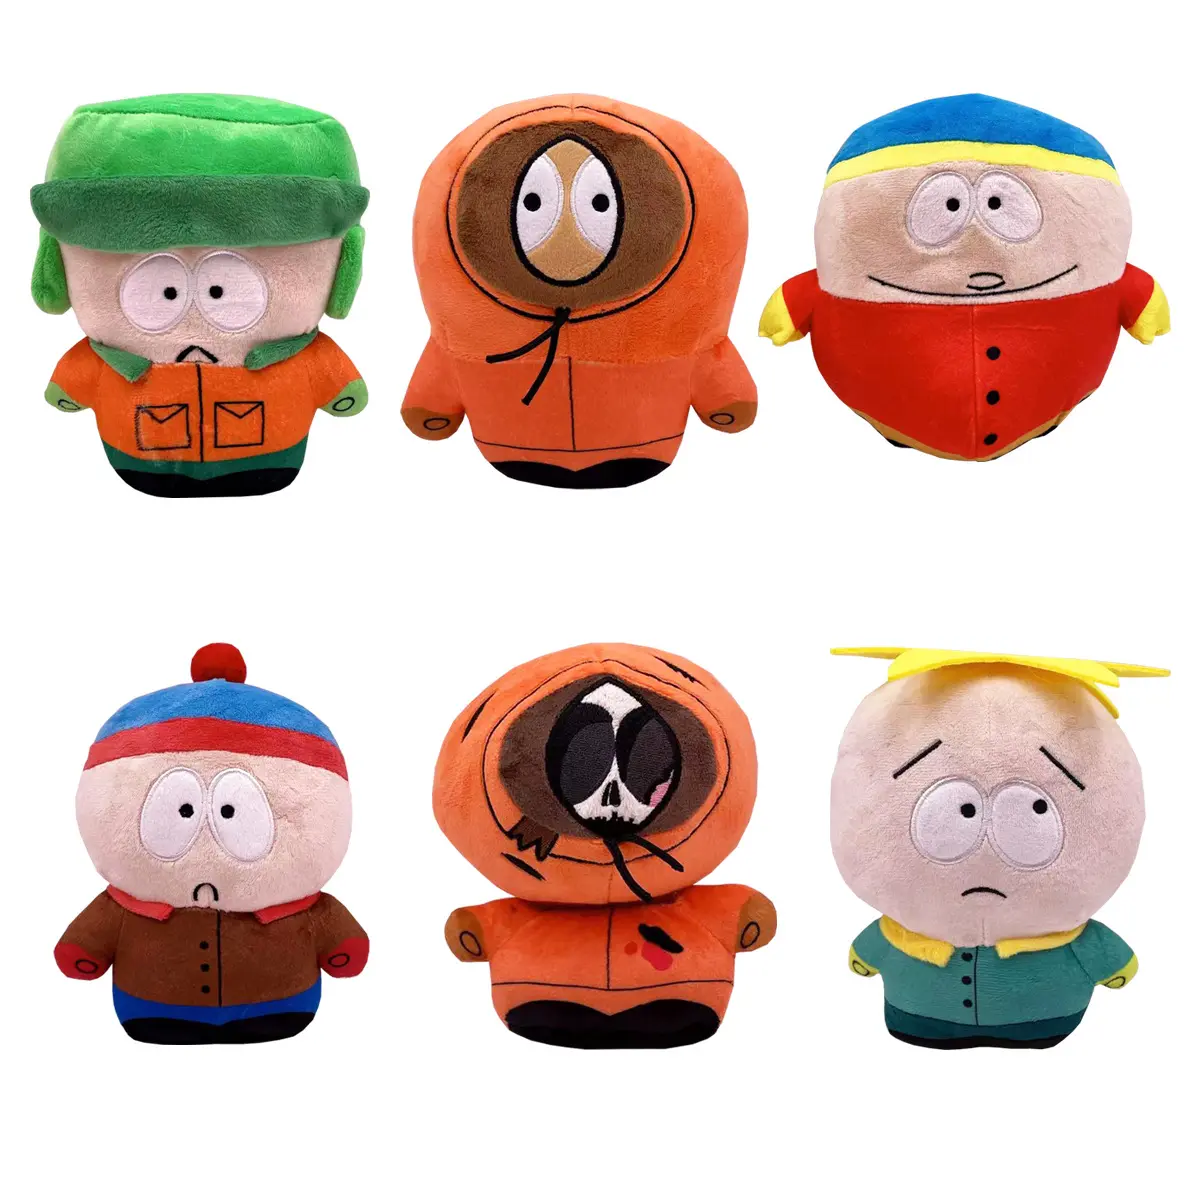 कार्टून खेल गुड़िया दक्षिण पार्क आलीशान खिलौना स्टेन केली केनी Cartman भरवां आलीशान गुड़िया बच्चों बच्चे जन्मदिन क्रिसमस उपहार